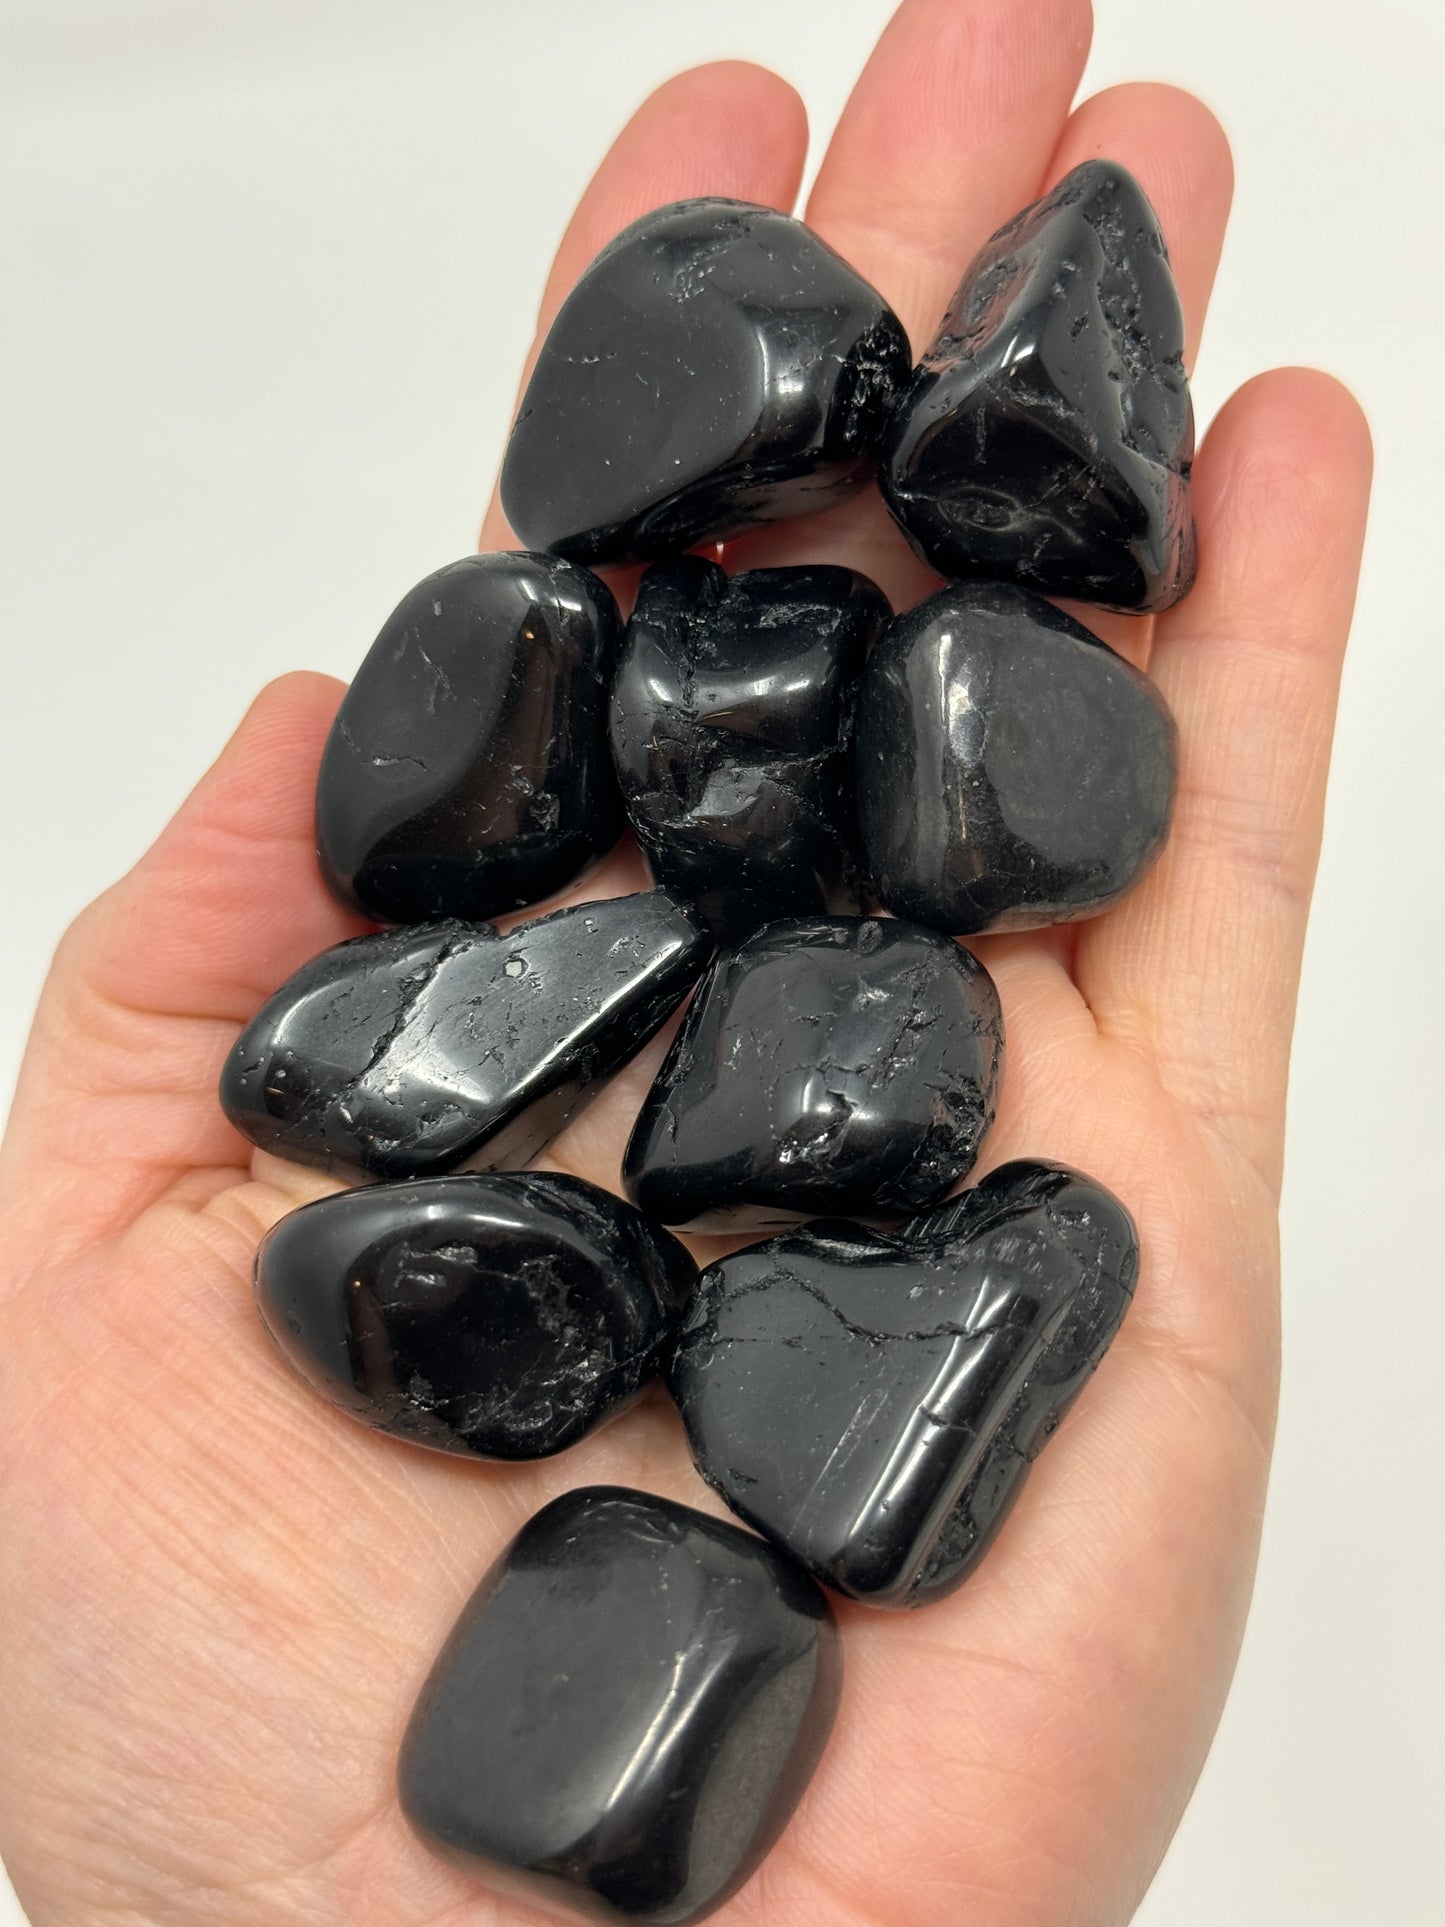 One Black Tourmaline Tumbled Stone